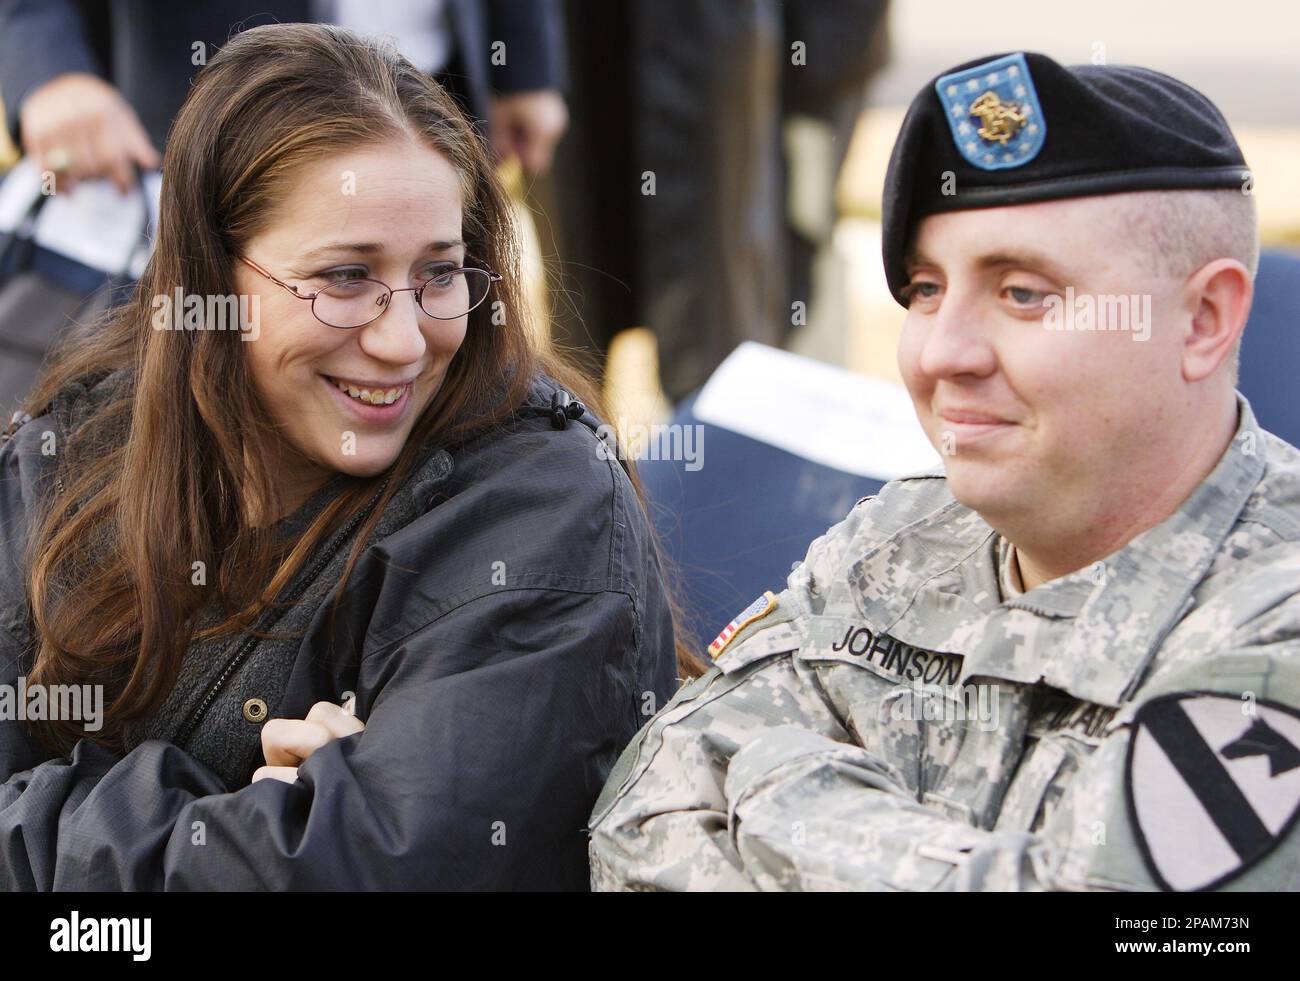 Army Spc. John Austin Johnson and his wife, Monalisa Johnson talk